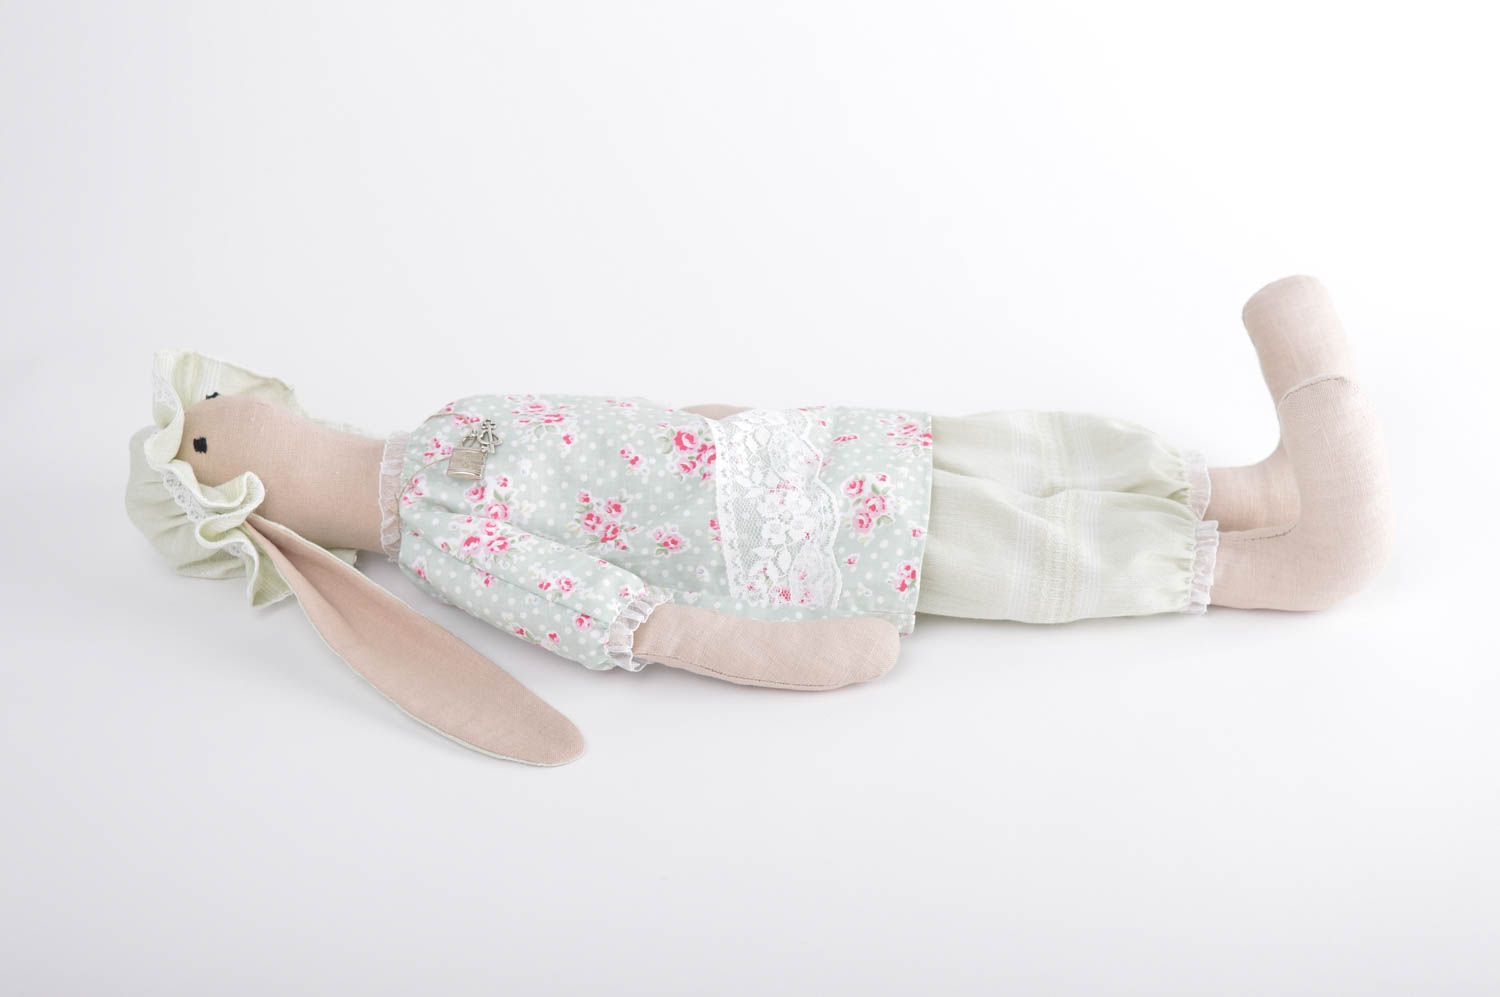 Unusual handmade soft toy rag doll for girls birthday gift ideas nursery design photo 4